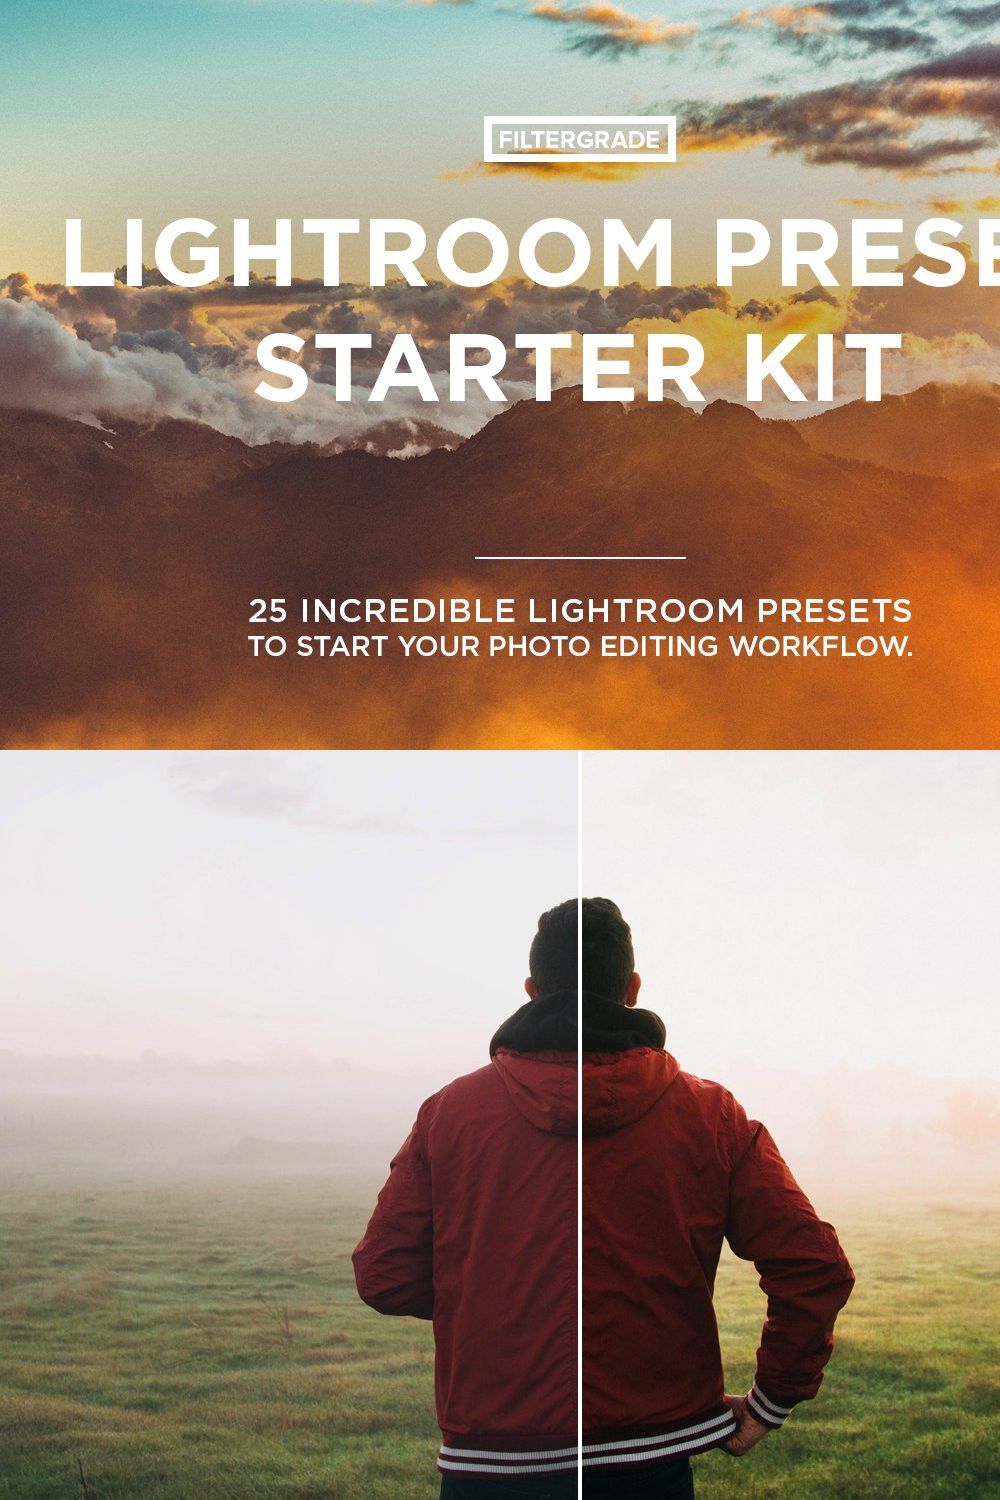 Lightroom Preset Starter Kit pinterest preview image.